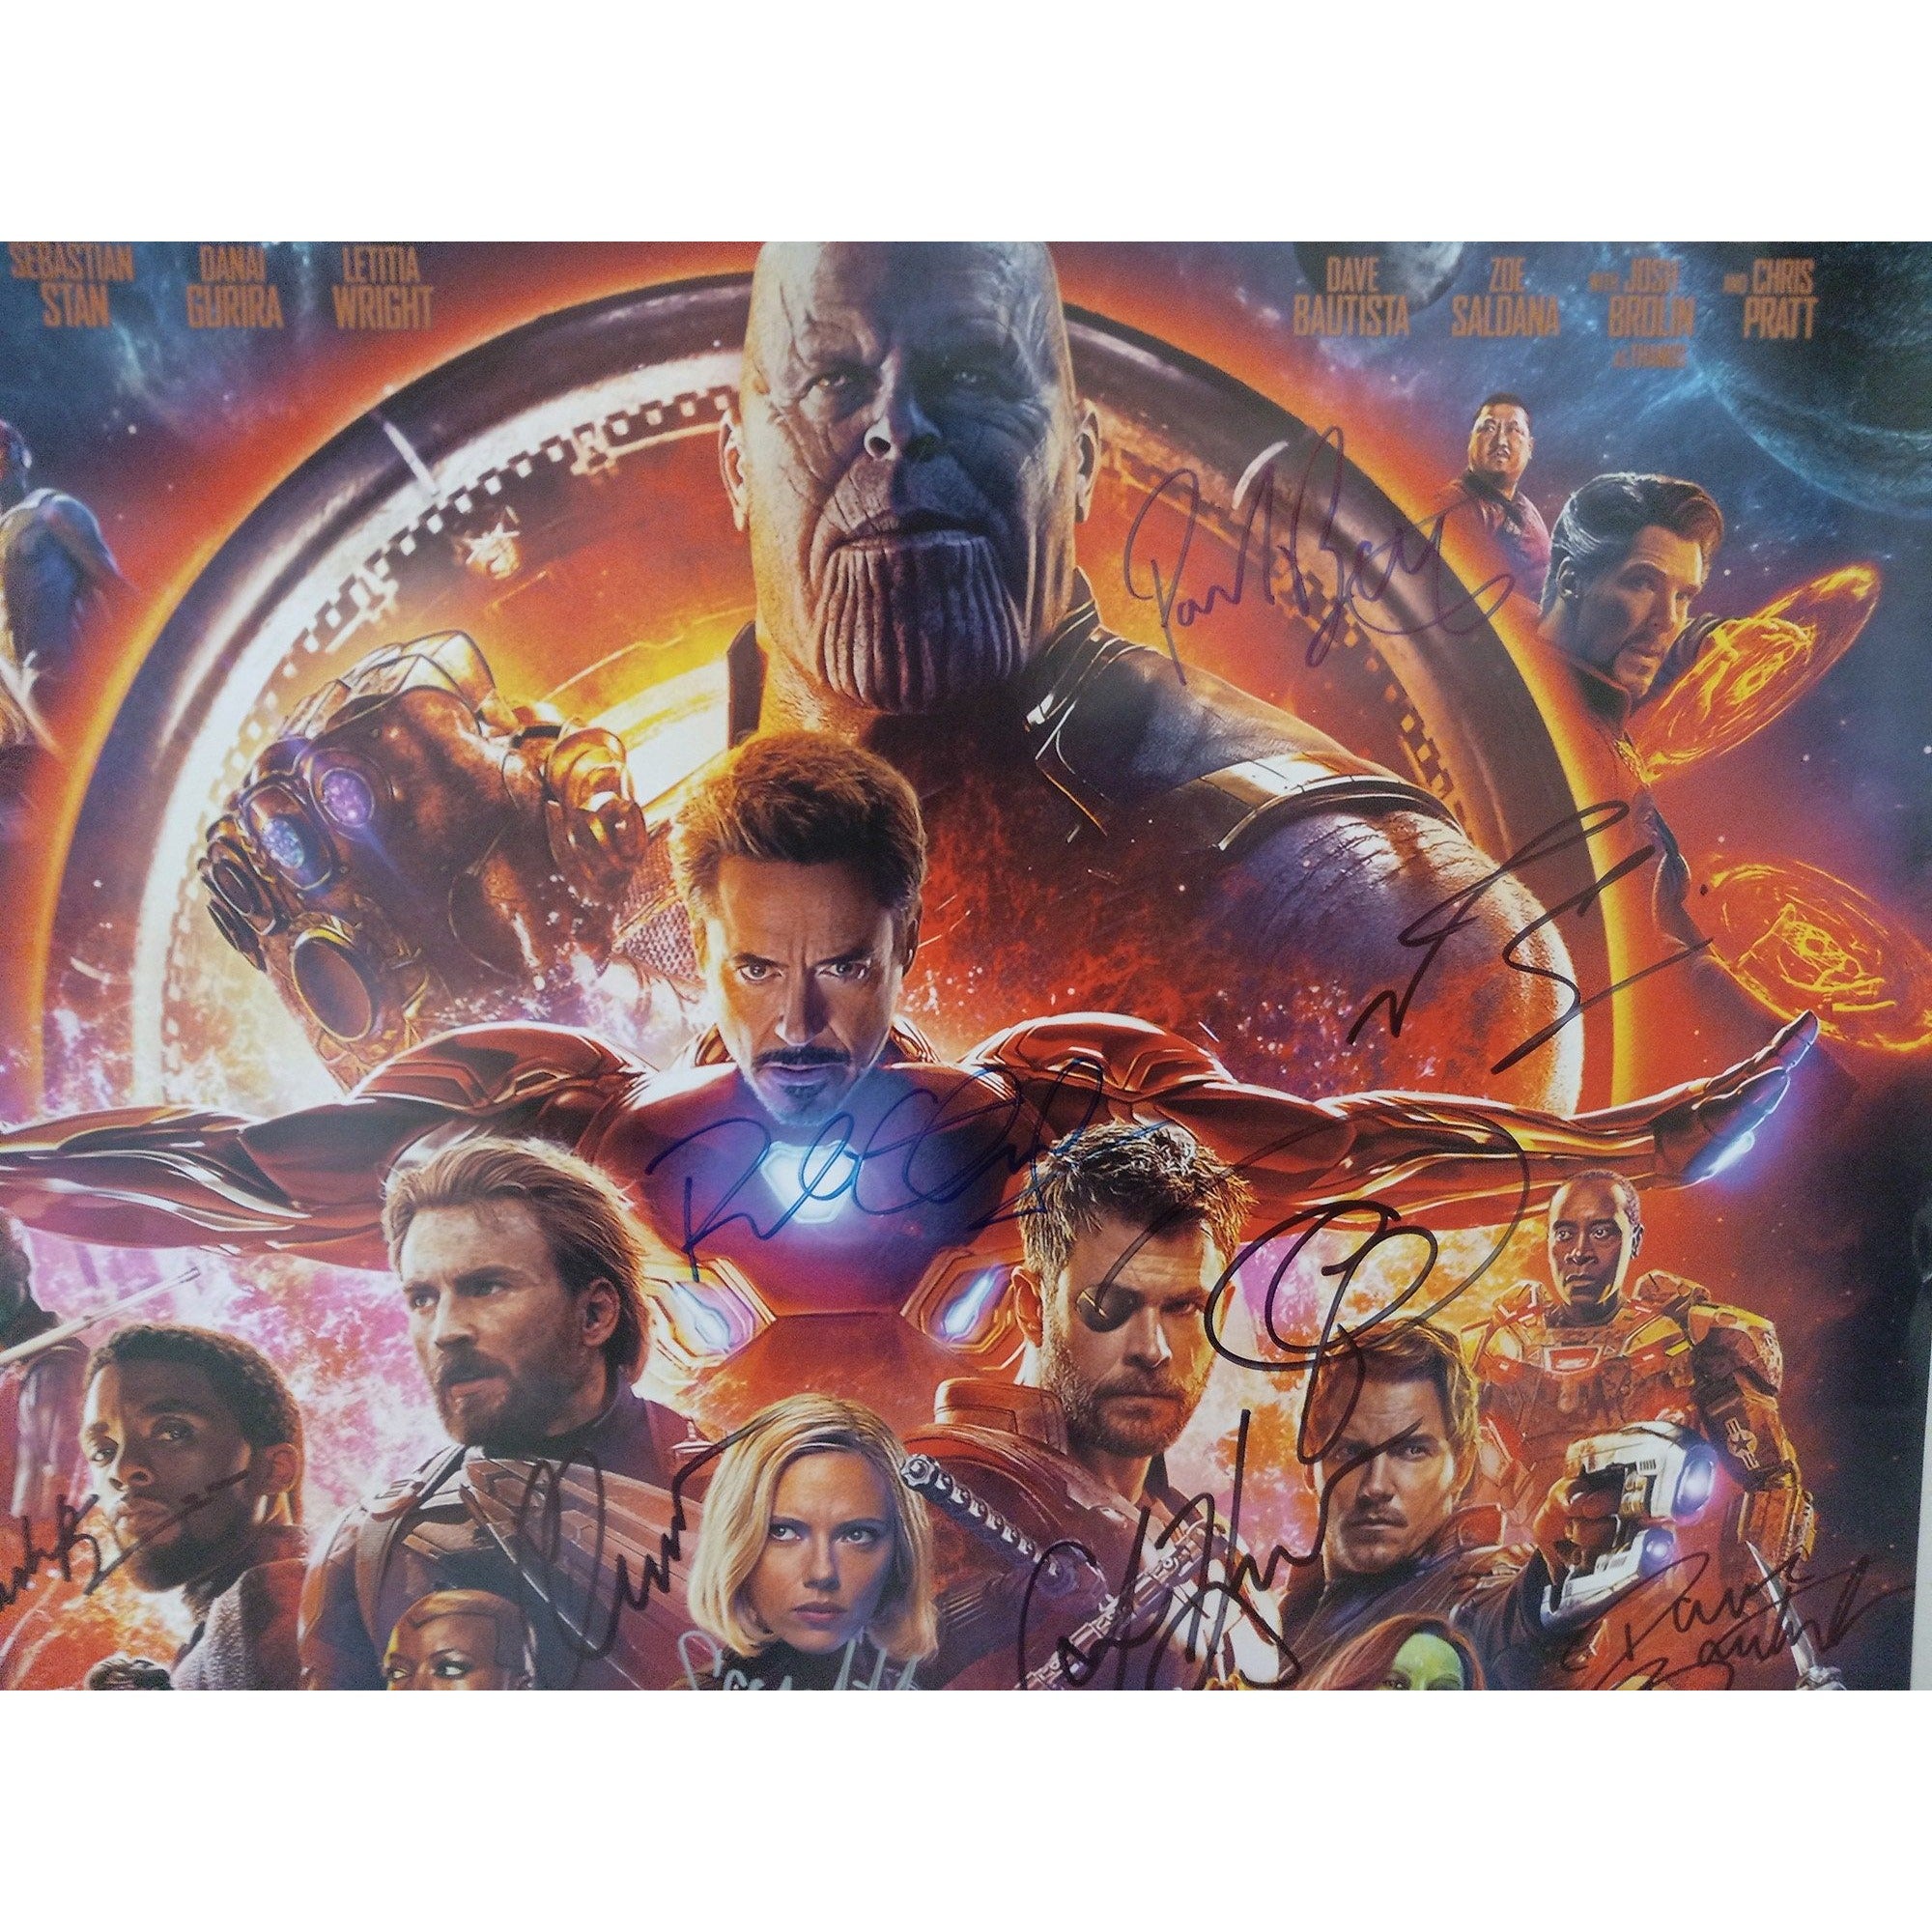 Avengers Infinity War poster 24x36 Scarlett Johansson, Chris Evans, Robert Downey Jr., Chadwick Boseman signed with proof